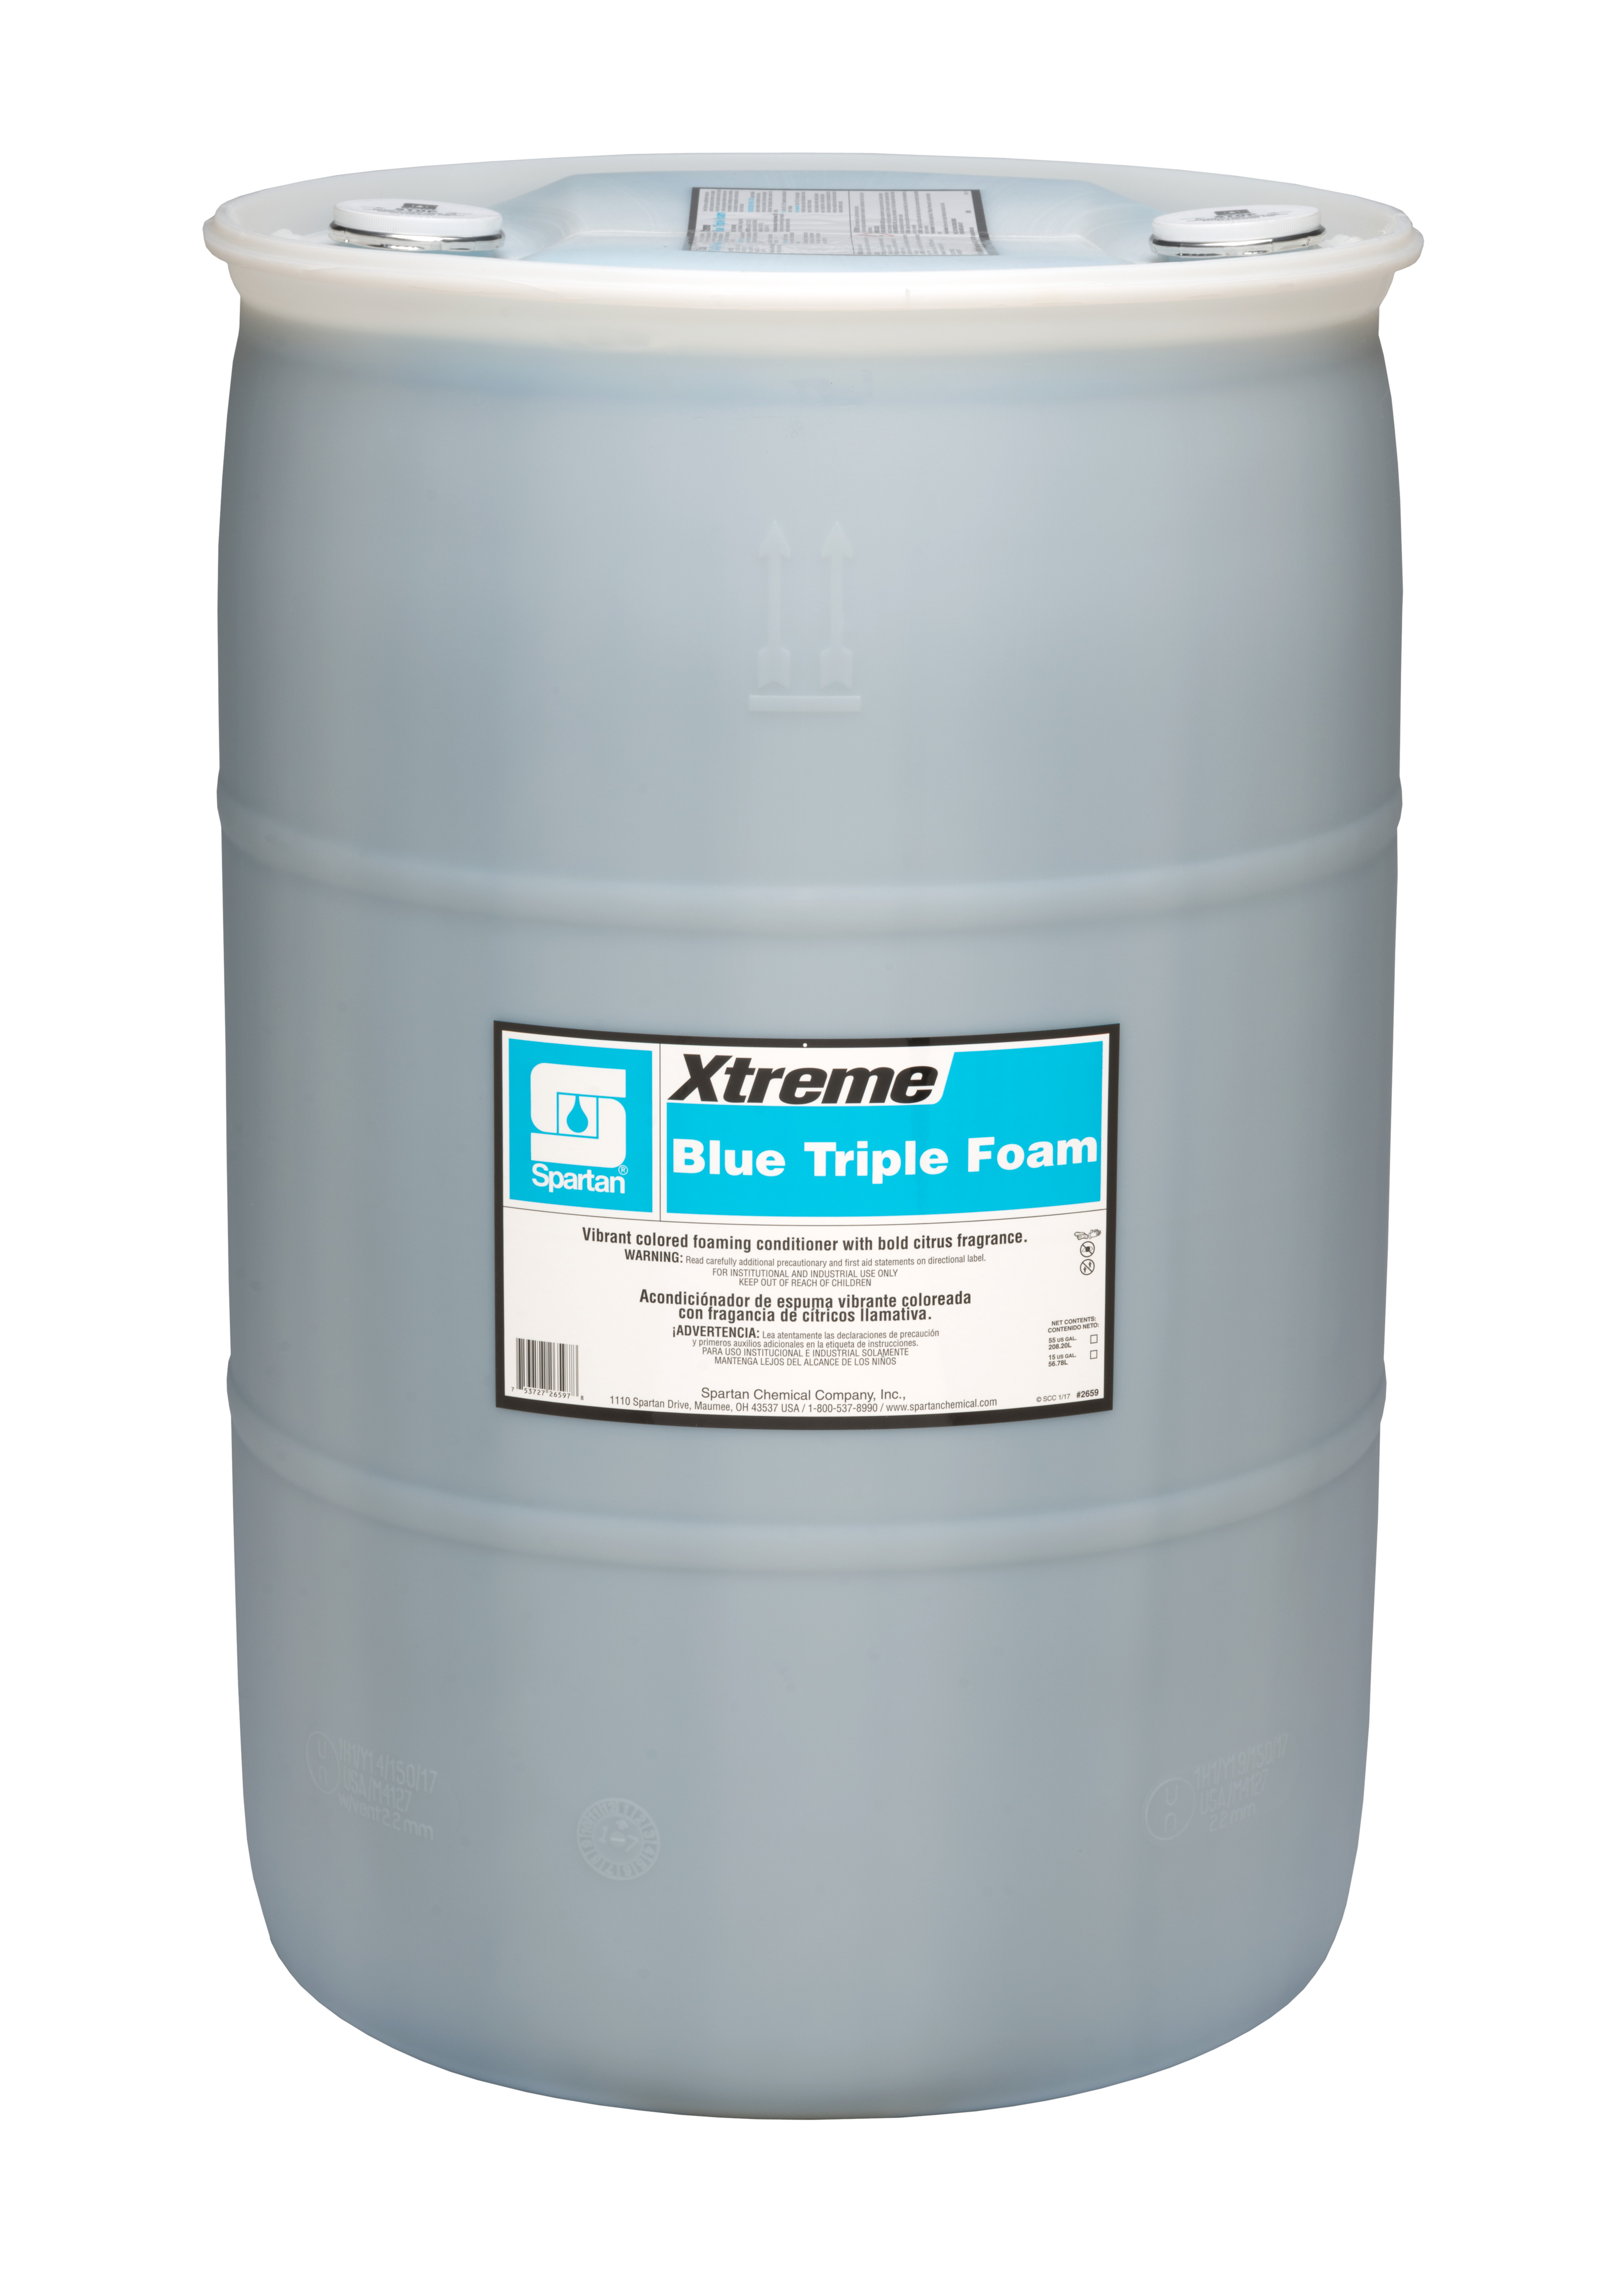 Spartan Chemical Company Xtreme Blue Triple Foam Polish, 55 GAL DRUM